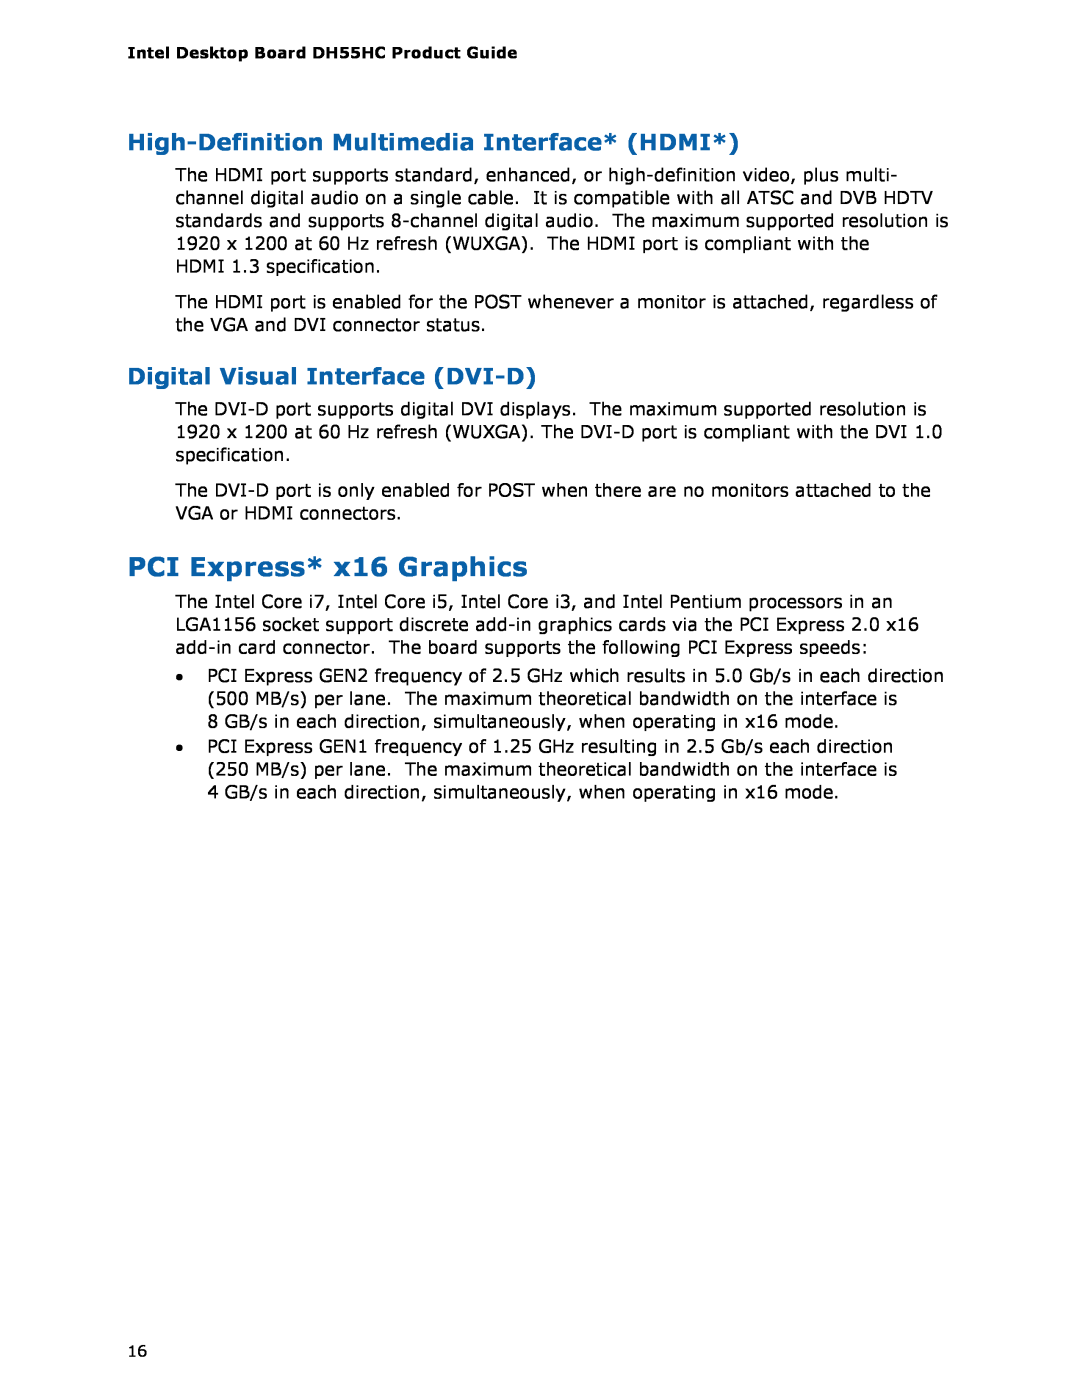 Intel BOXDH55HC PCI Express* x16 Graphics, High-Definition Multimedia Interface* HDMI, Digital Visual Interface DVI-D 